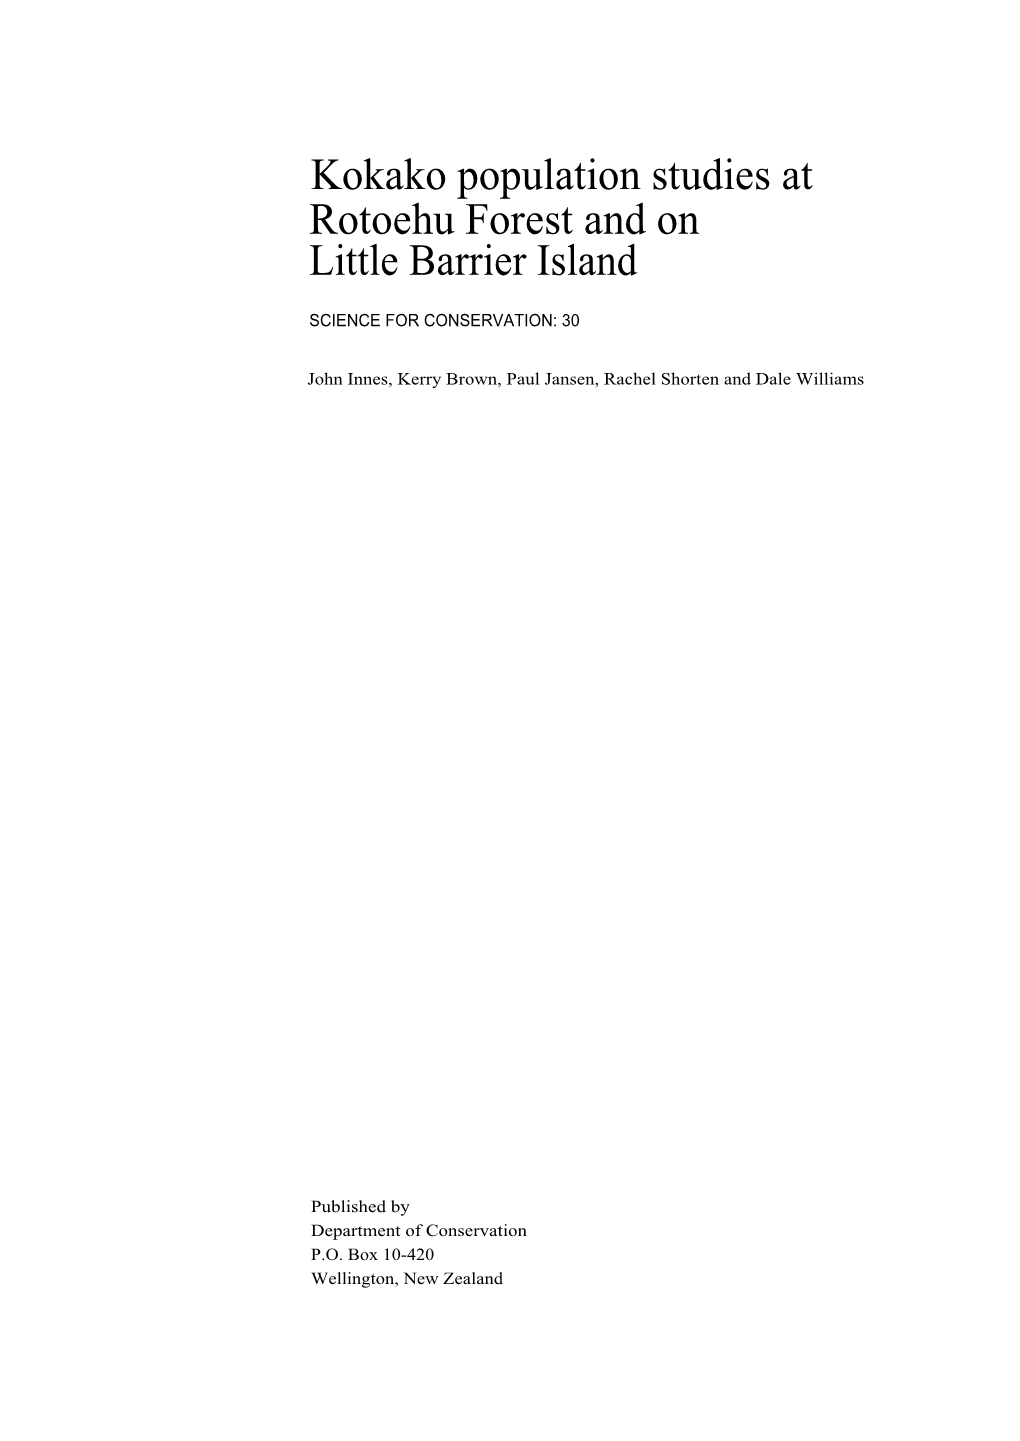 Kokako Population Studies at Rotoehu Forest and on Little Barrier Island